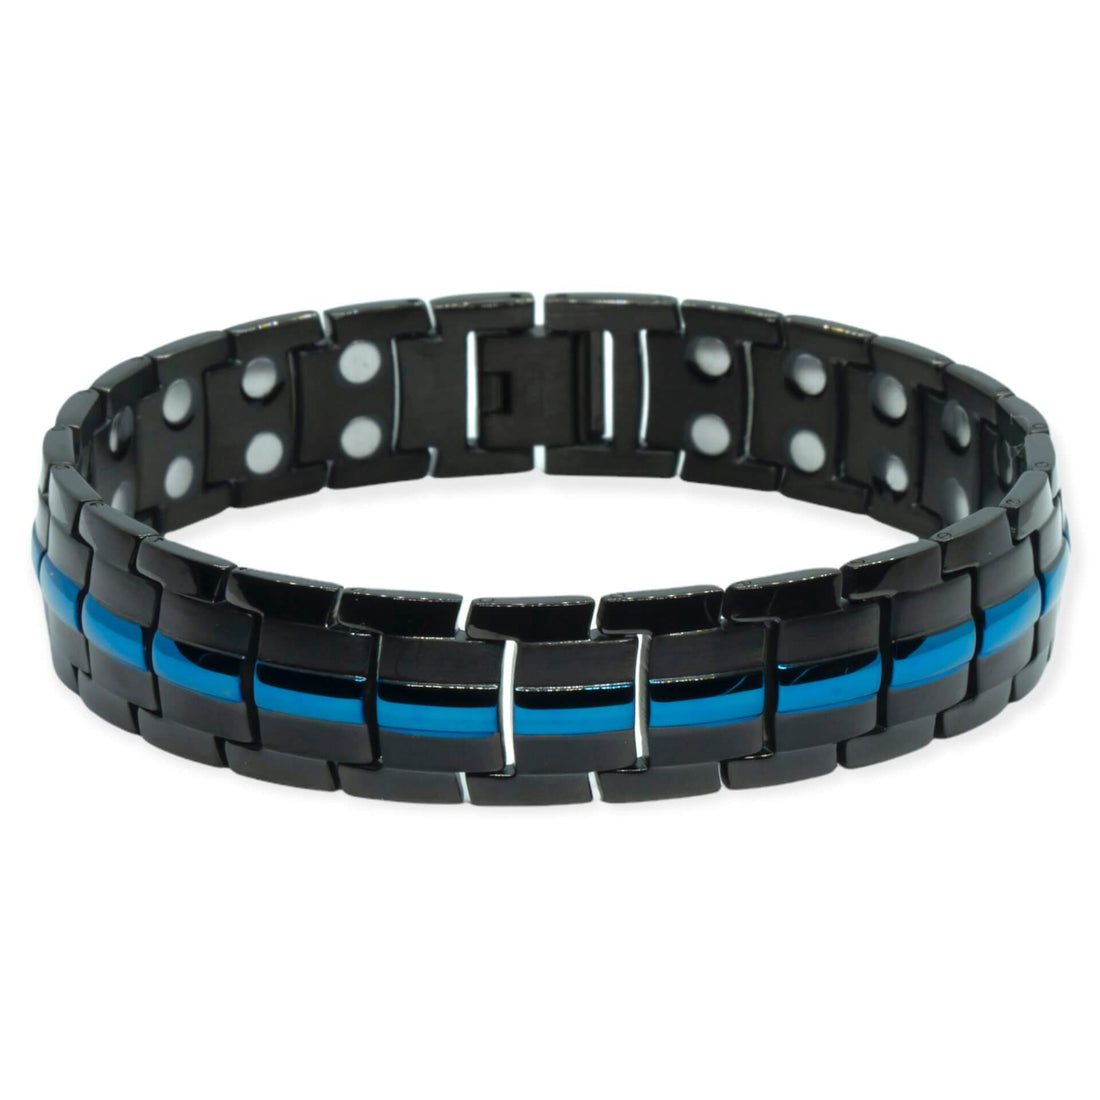 Magnet Bracelet - With blue elements